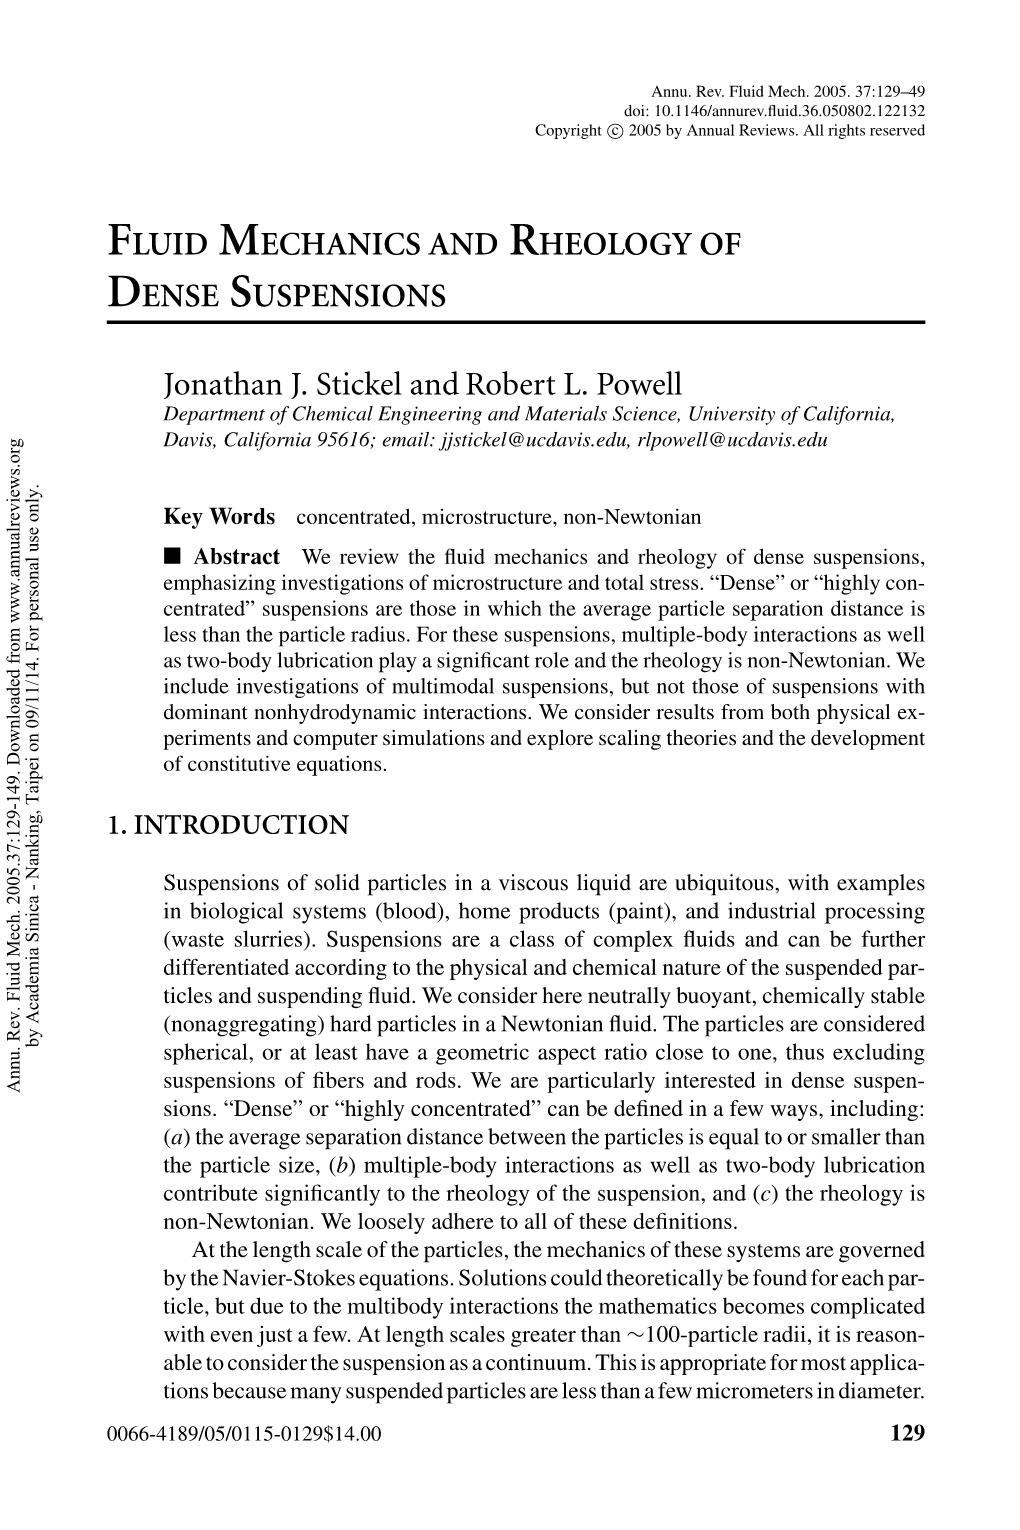 Fluid Mechanics and Rheology of Dense Suspensions